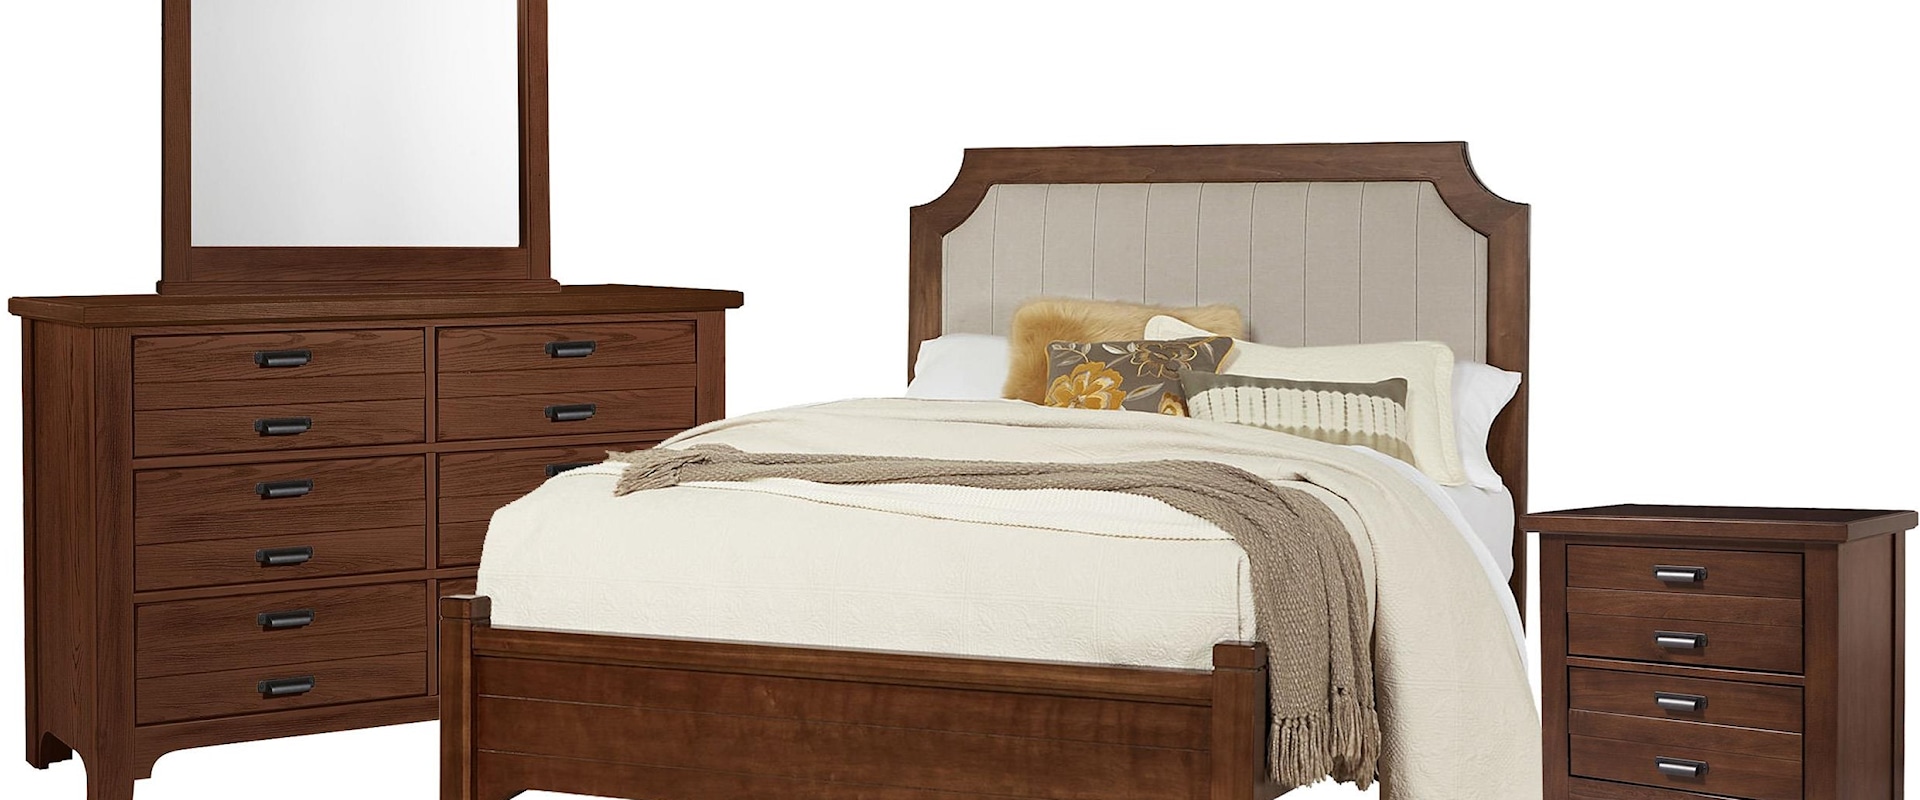 King Upholstered Bed, Double Dresser, Landscape Mirror, 2 Drawer Nightstand